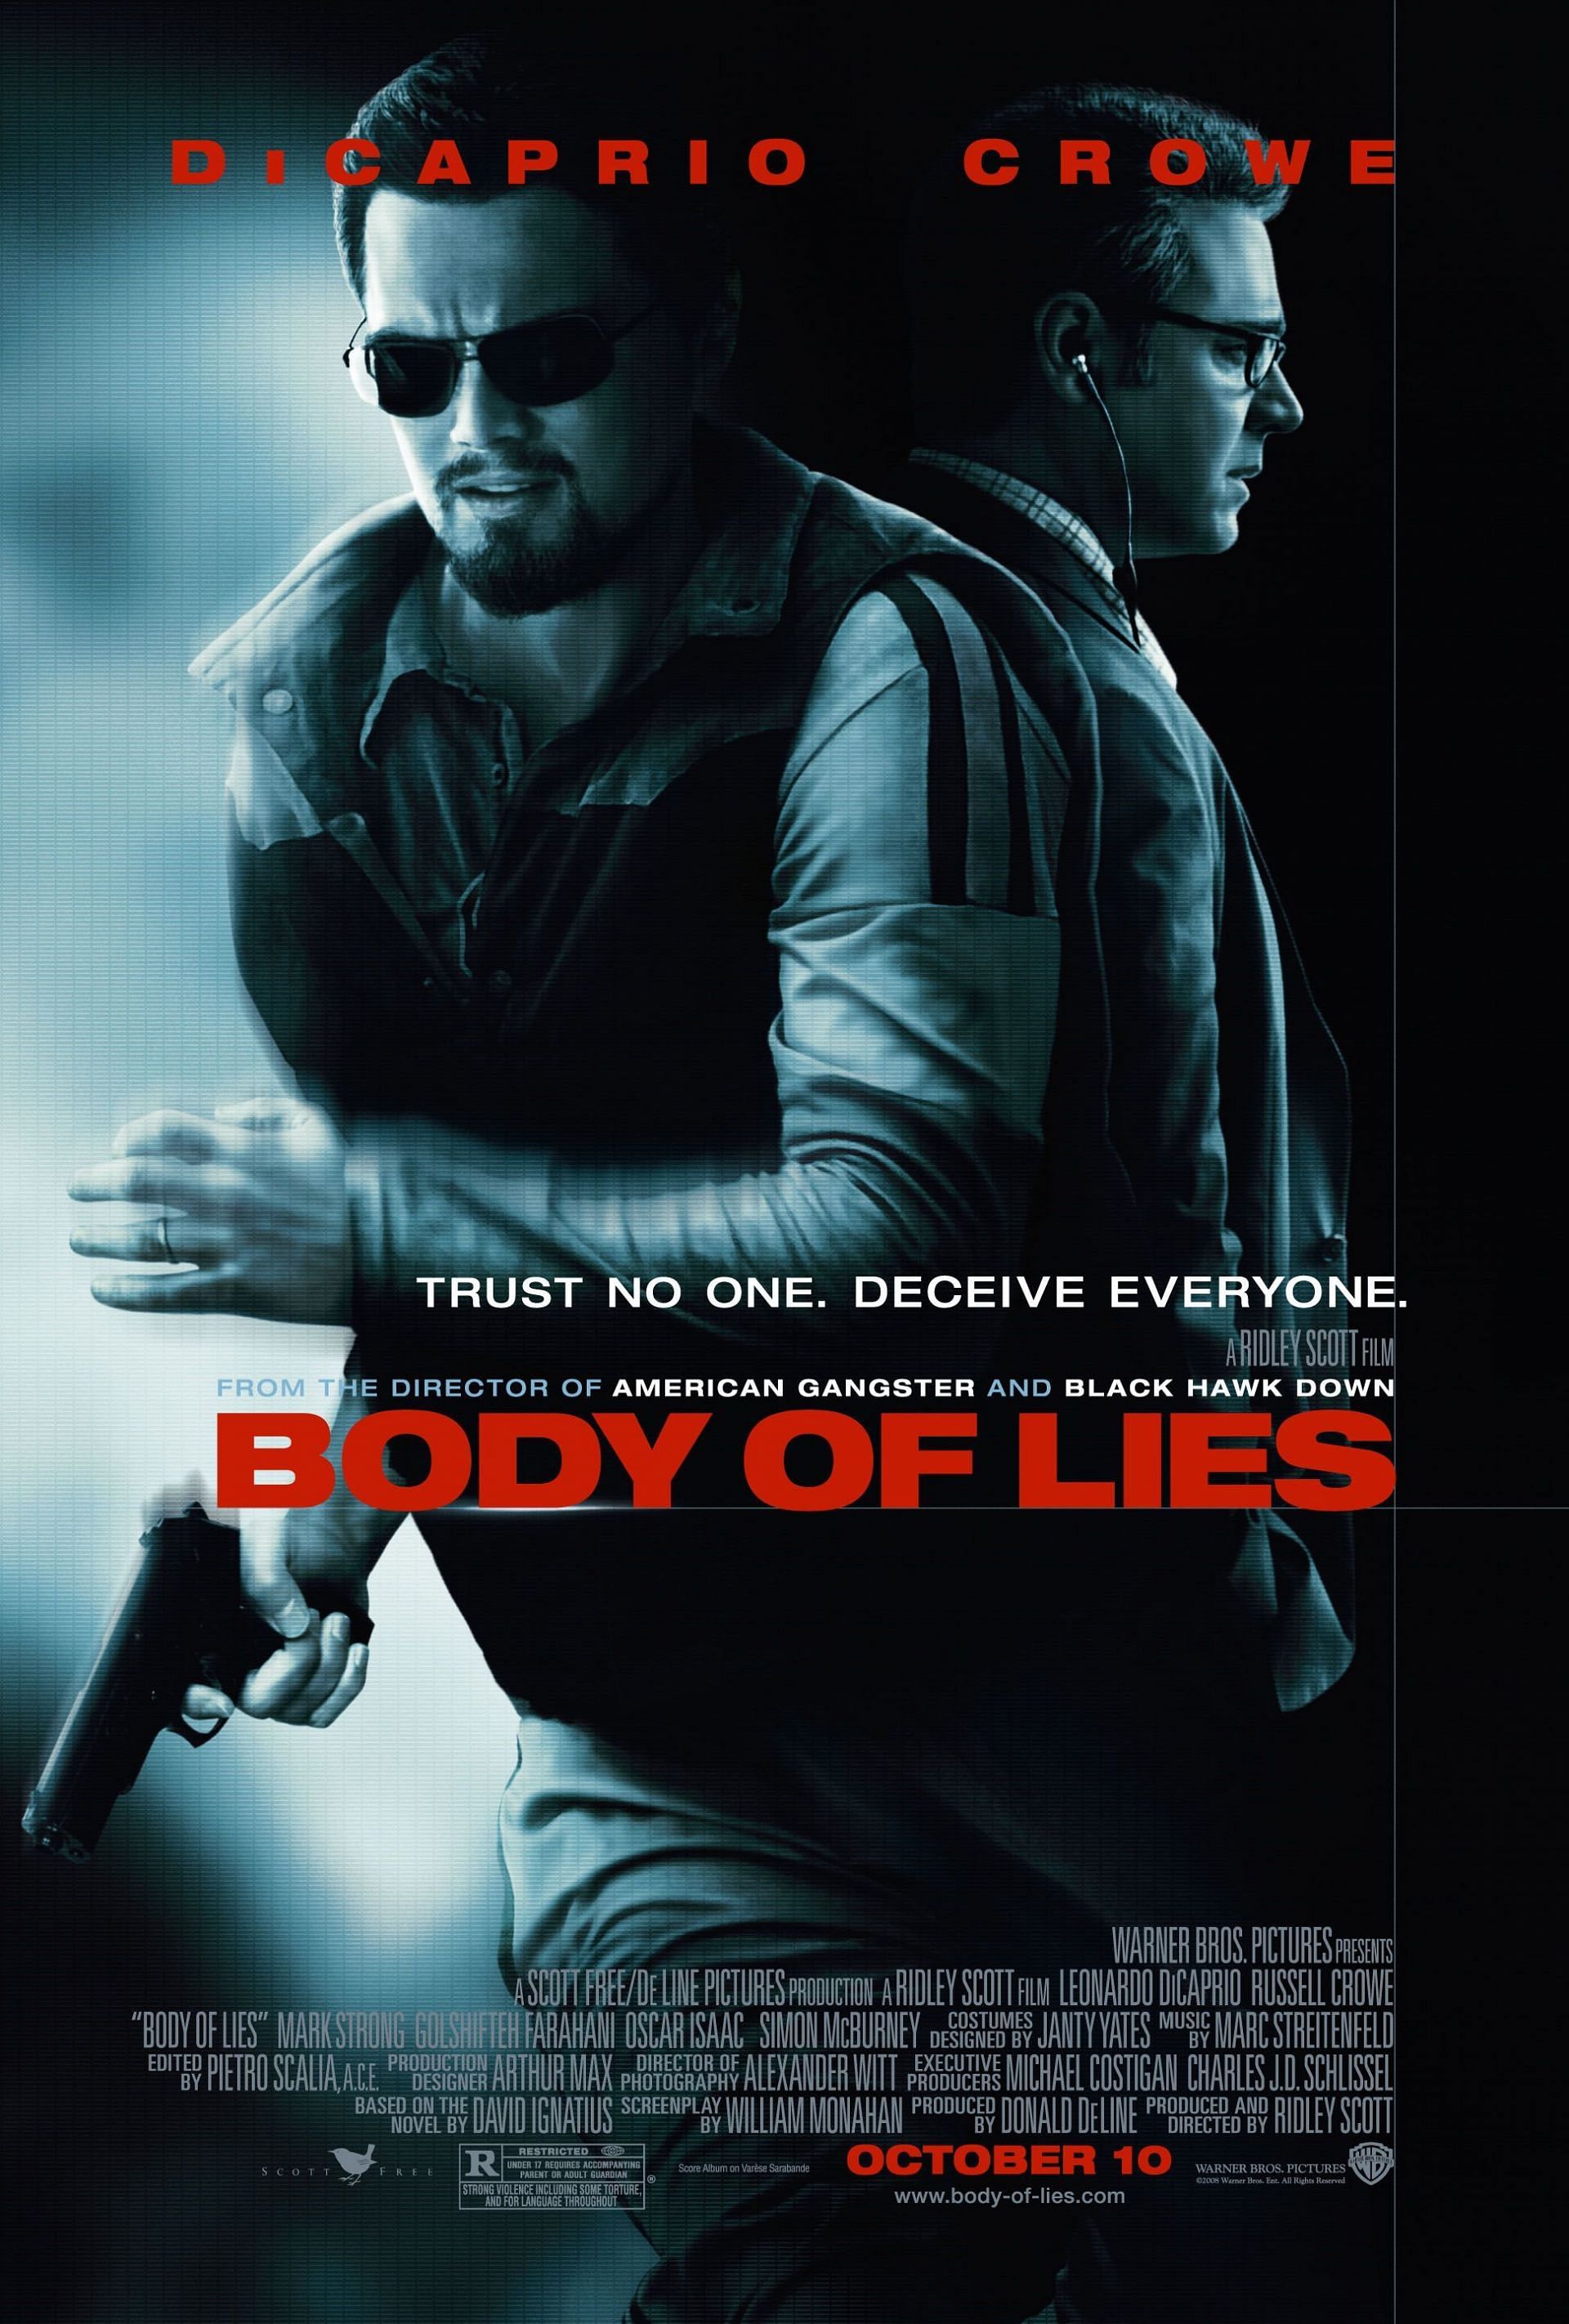 Body of Lies (Image via Warner Bros)